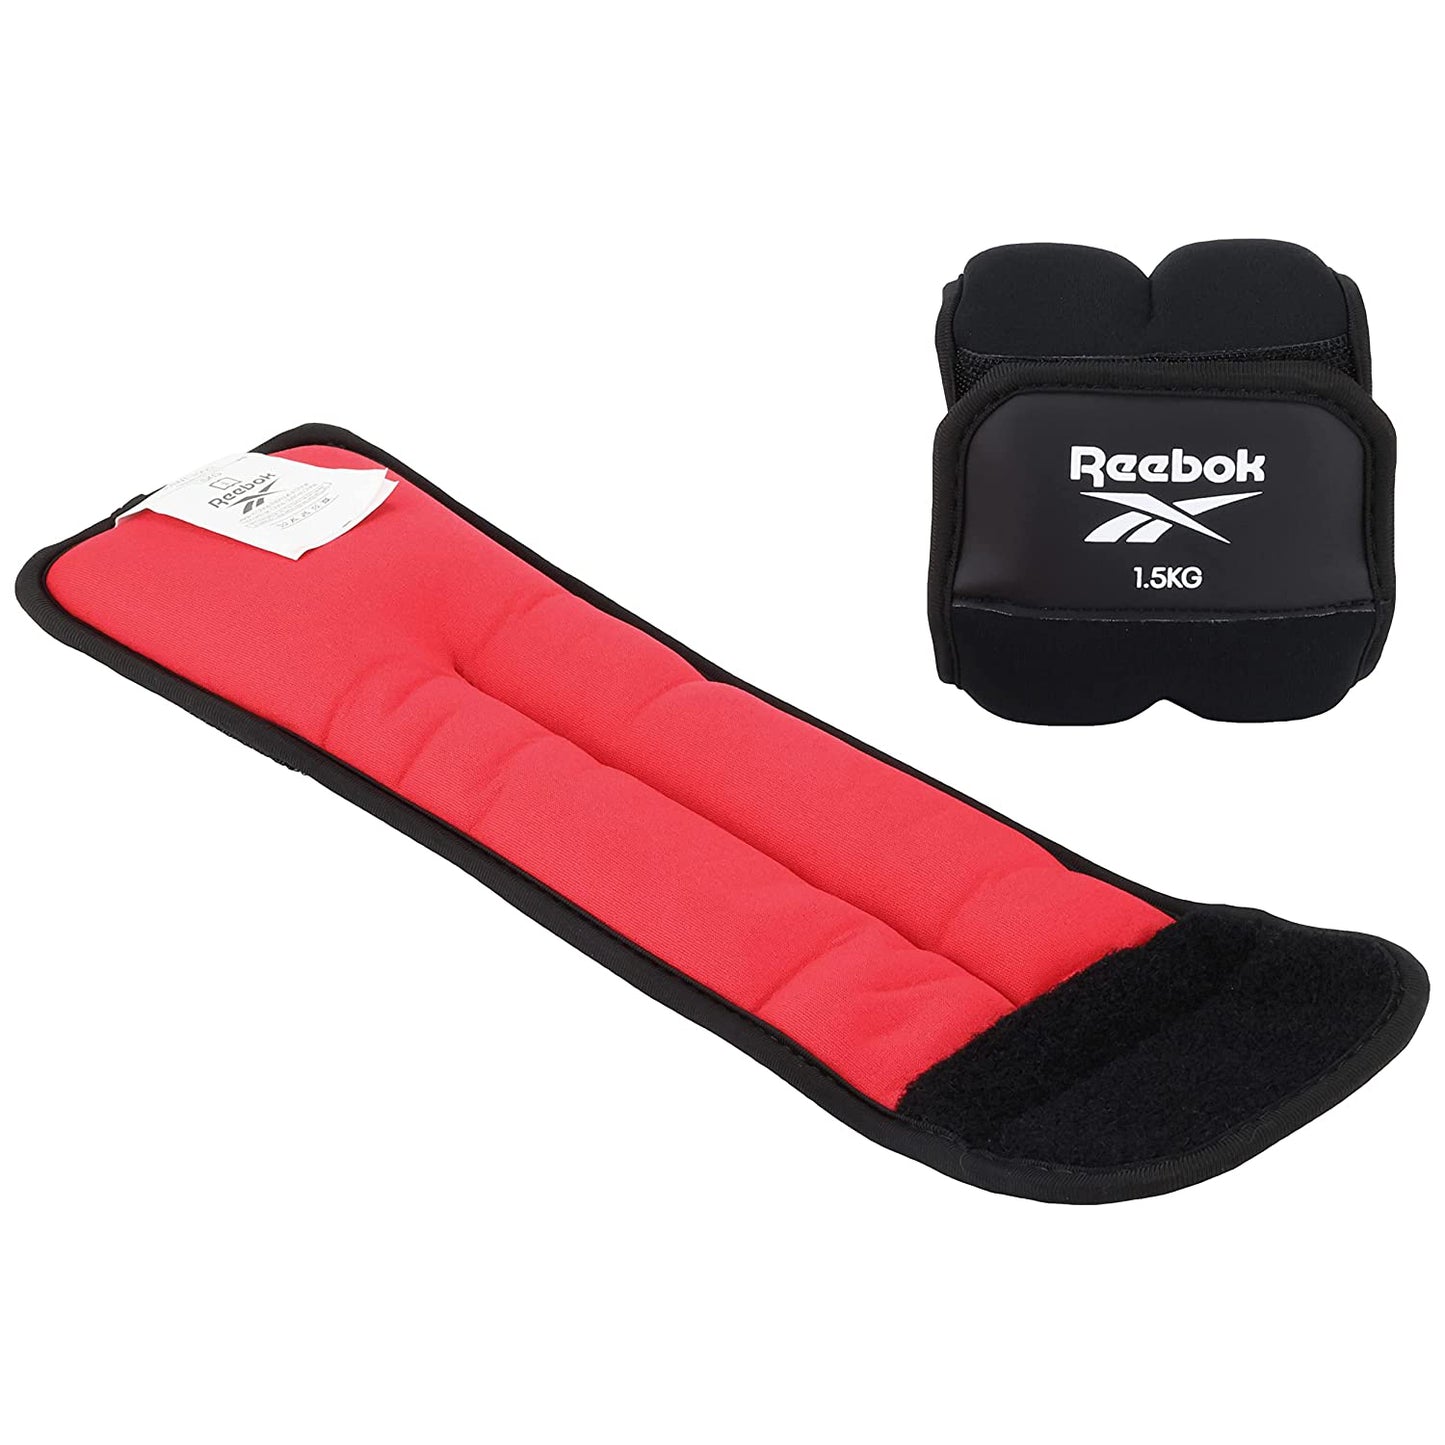 Reebok Ankle Weights, Black/Red - Best Price online Prokicksports.com